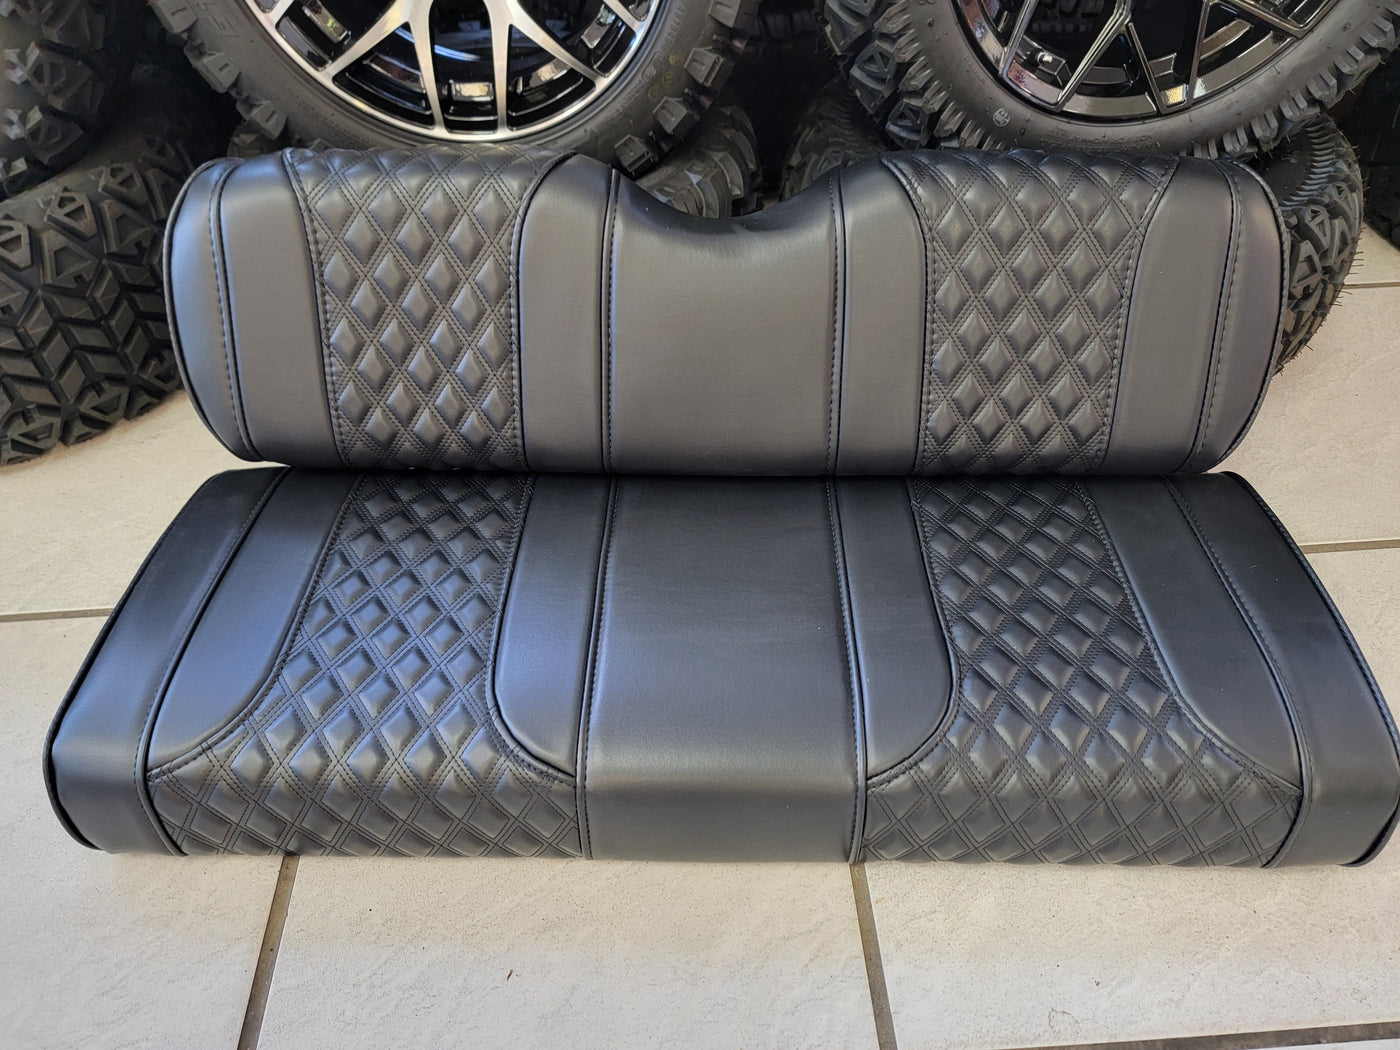 Denali Diamond Stich Seats Black with Black pipe fits (Ezgo) Txt & Rxv Golf Carts